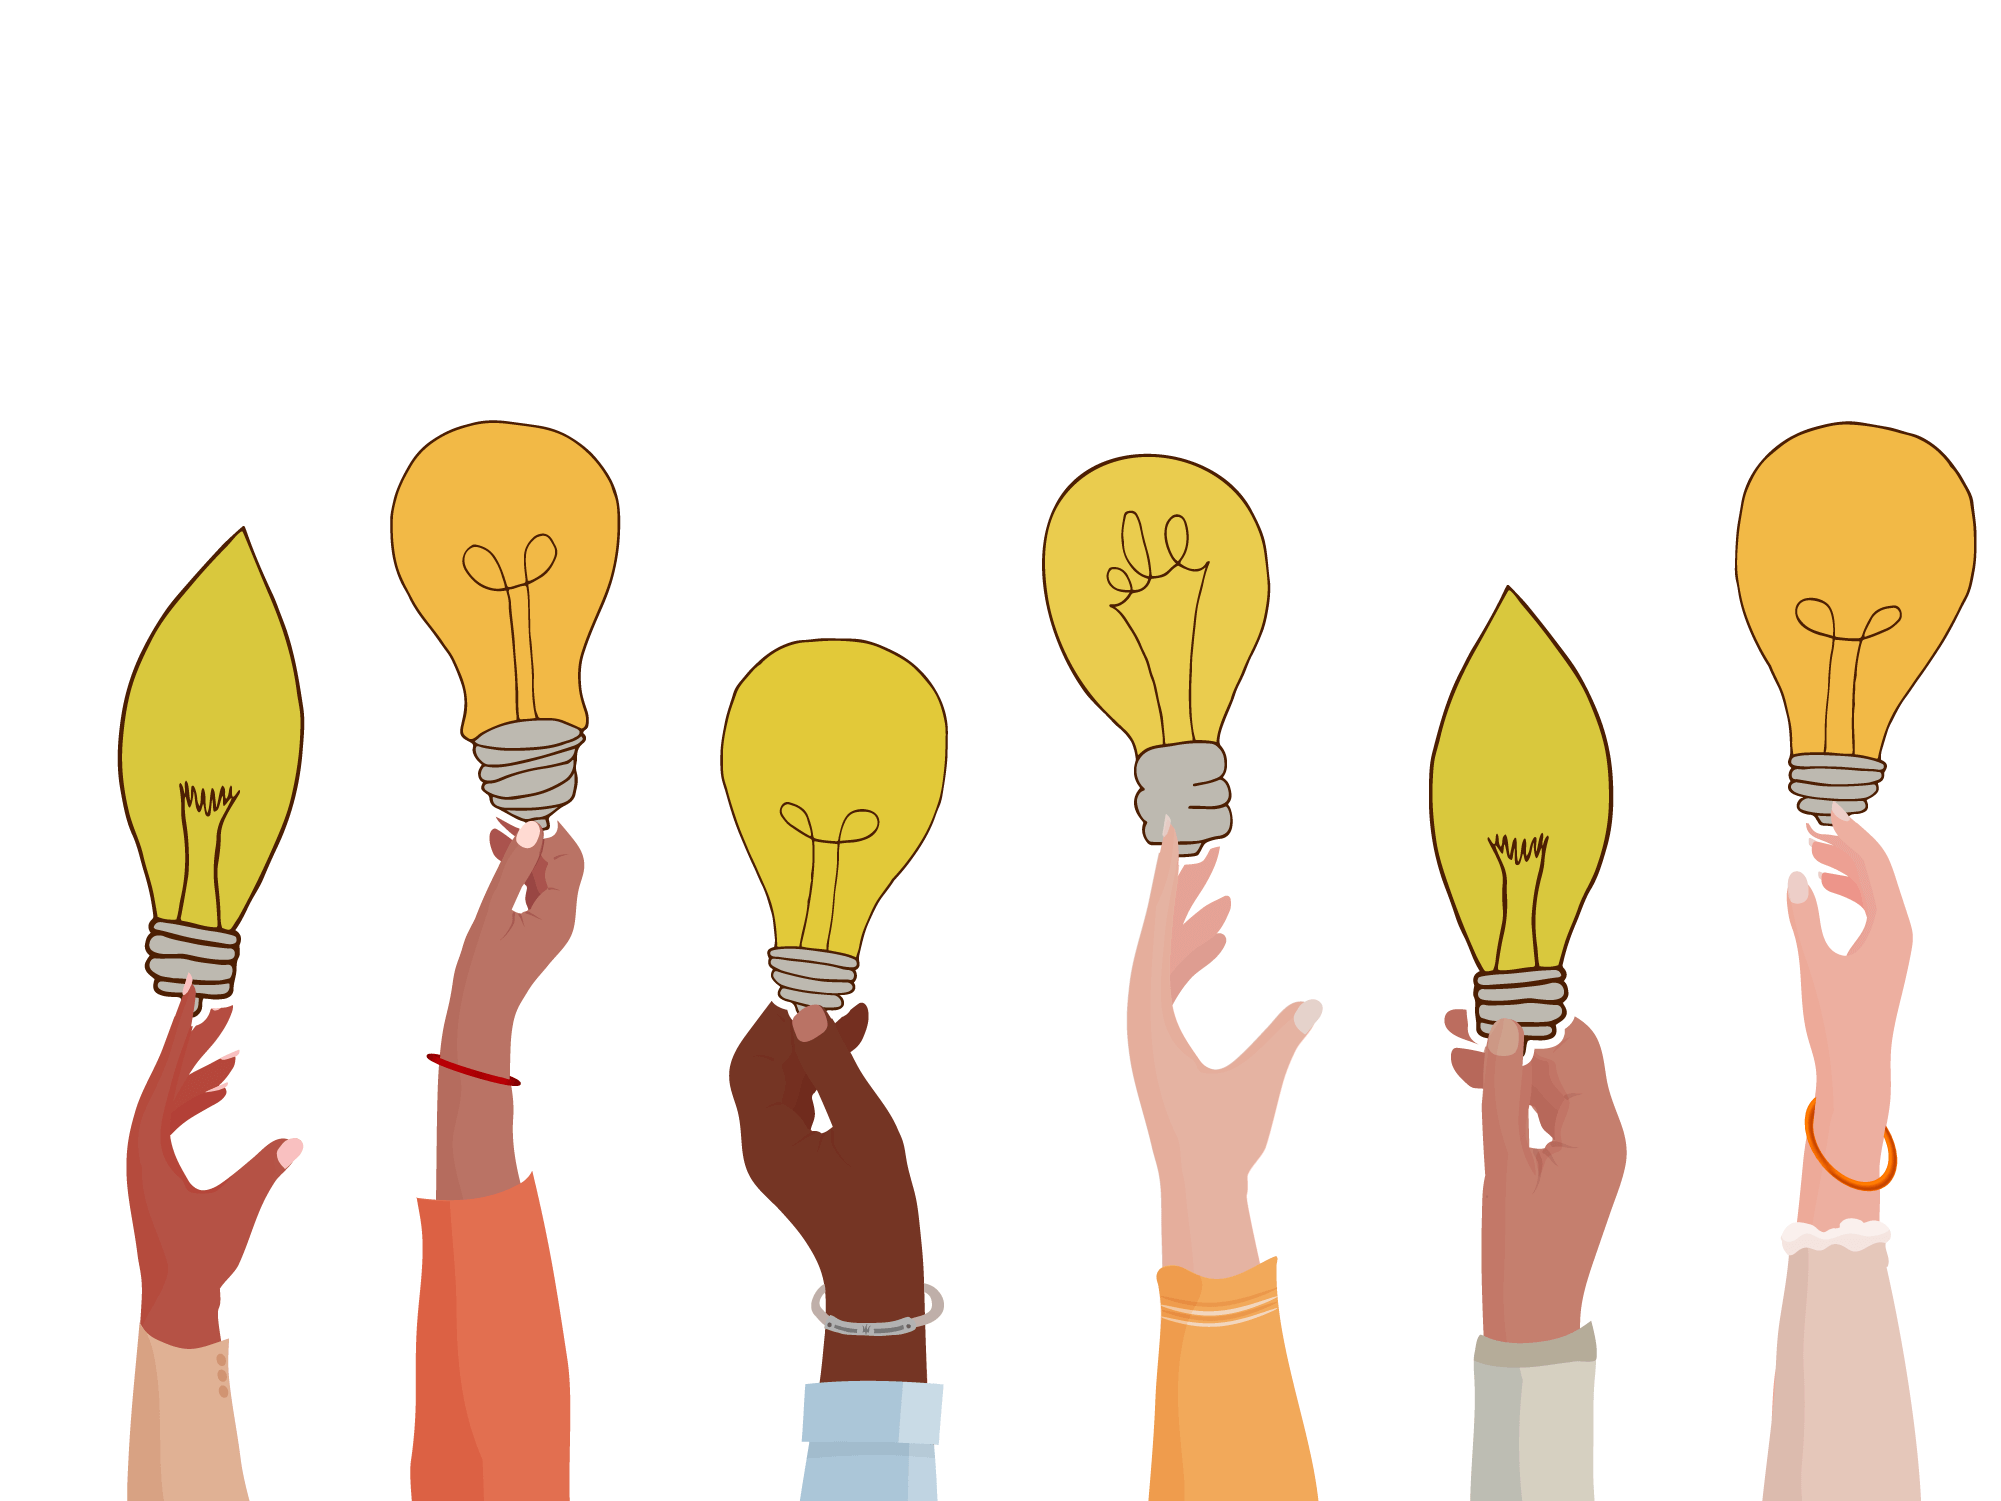 Illustration of diverse raised hands holding lightbulbs.